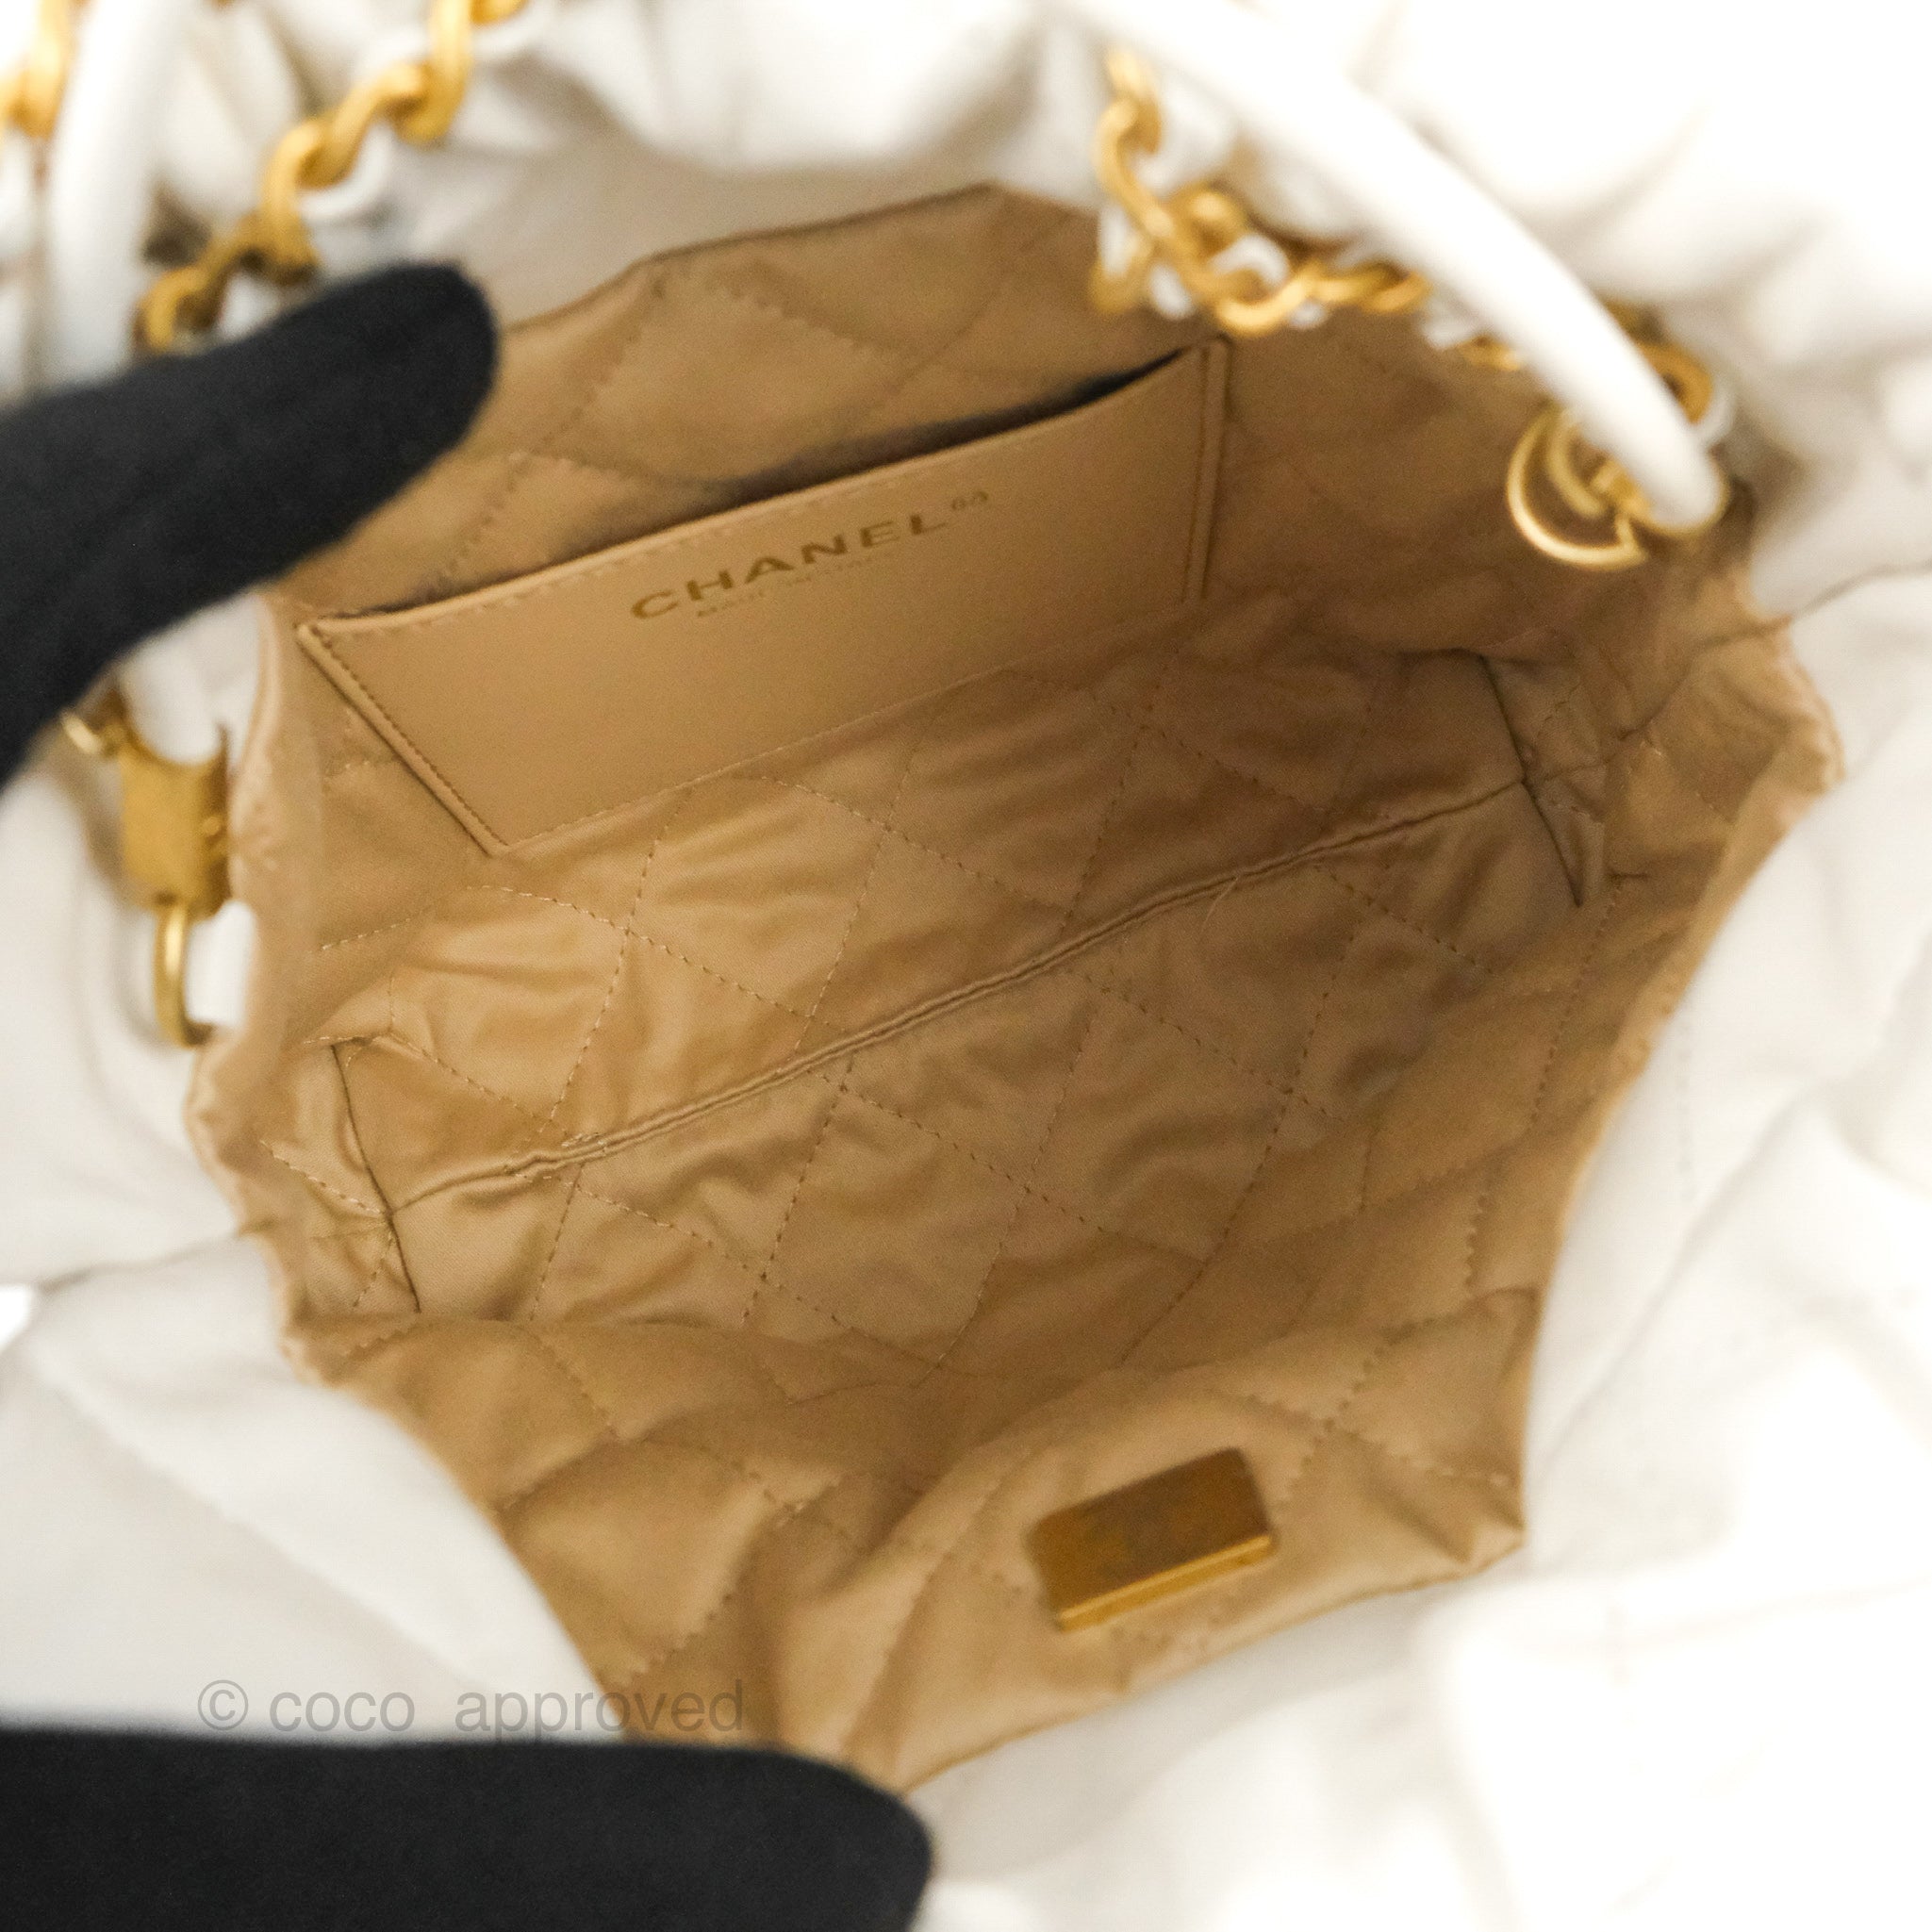 Chanel The Chanel 22 Mini Handbag